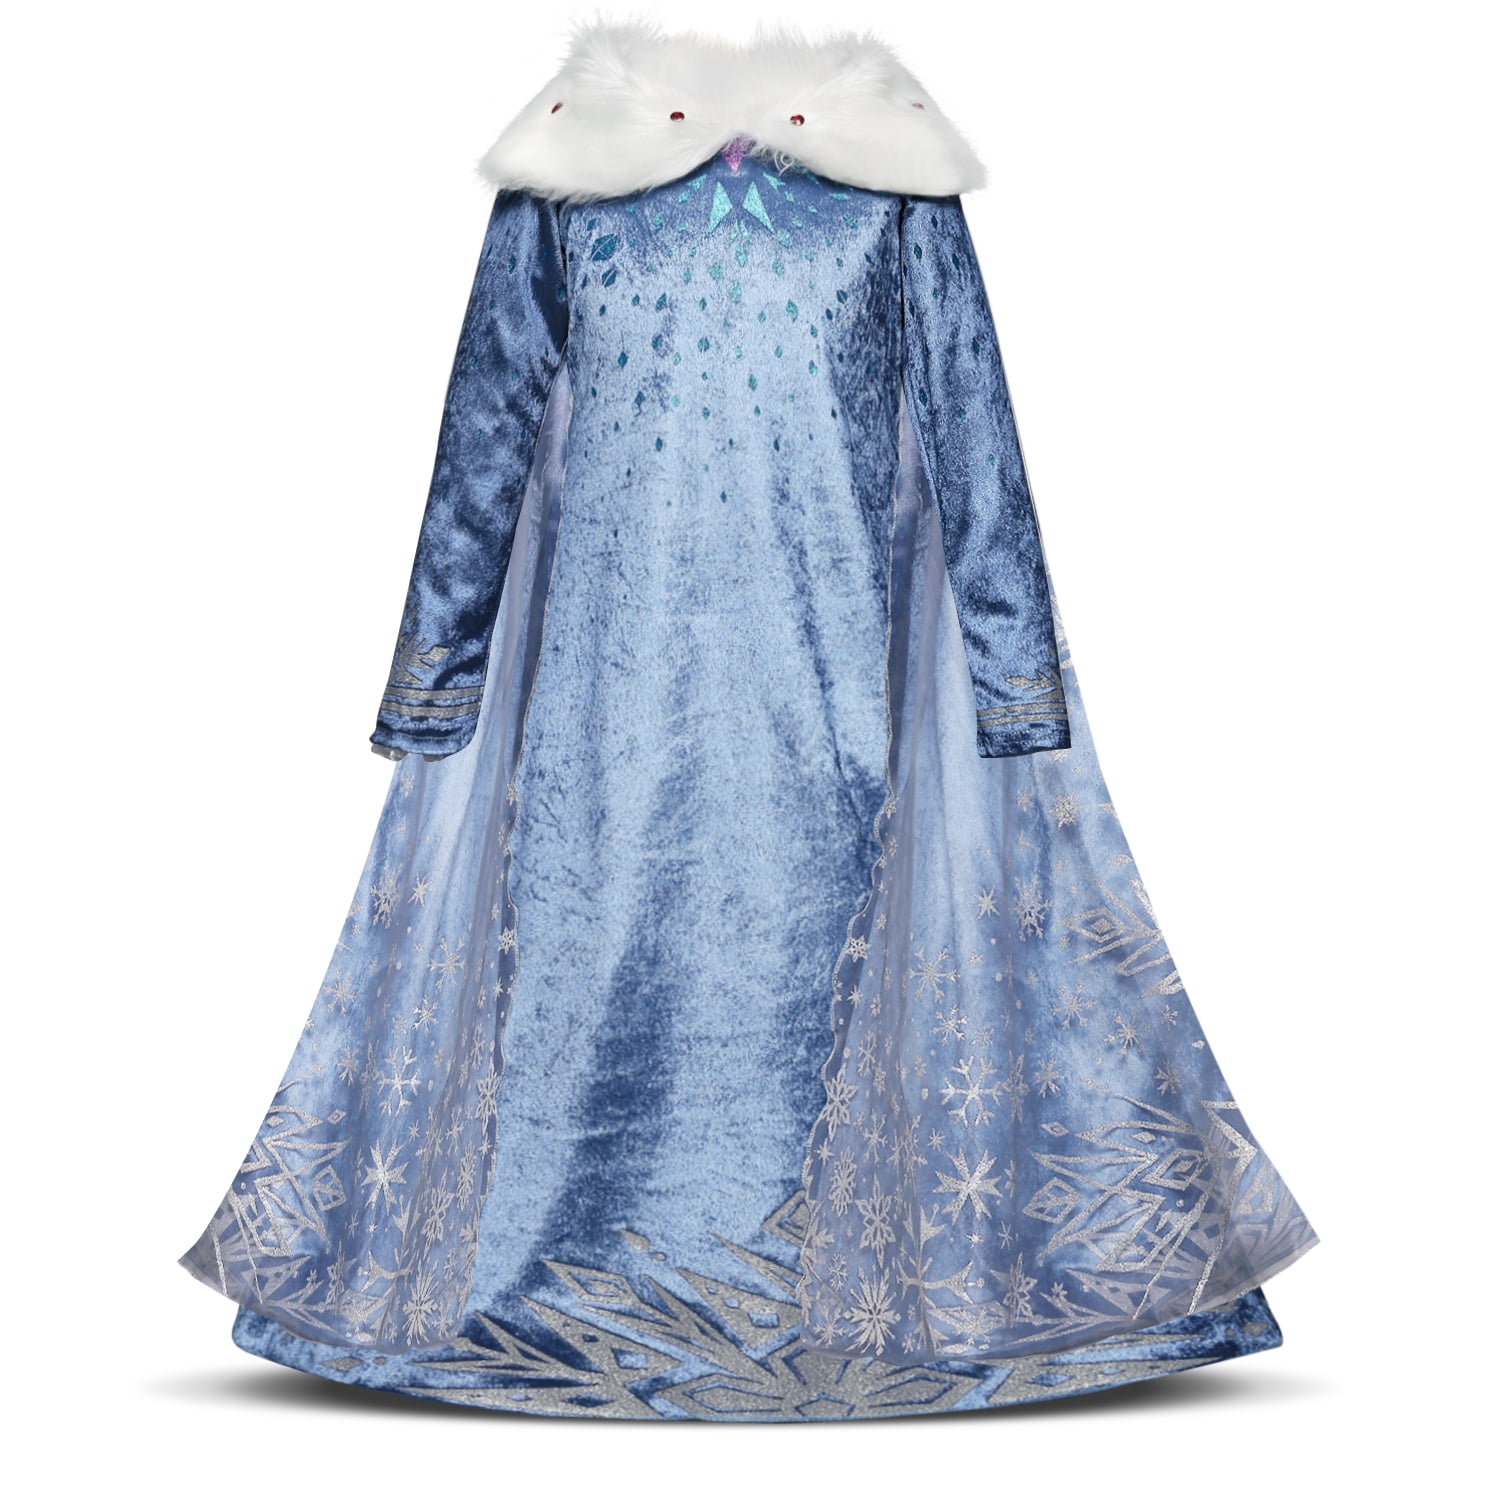 Vestiti Carnevale Elsa Set Accessori Dress up Elsa Costumes 457001 Frozen 